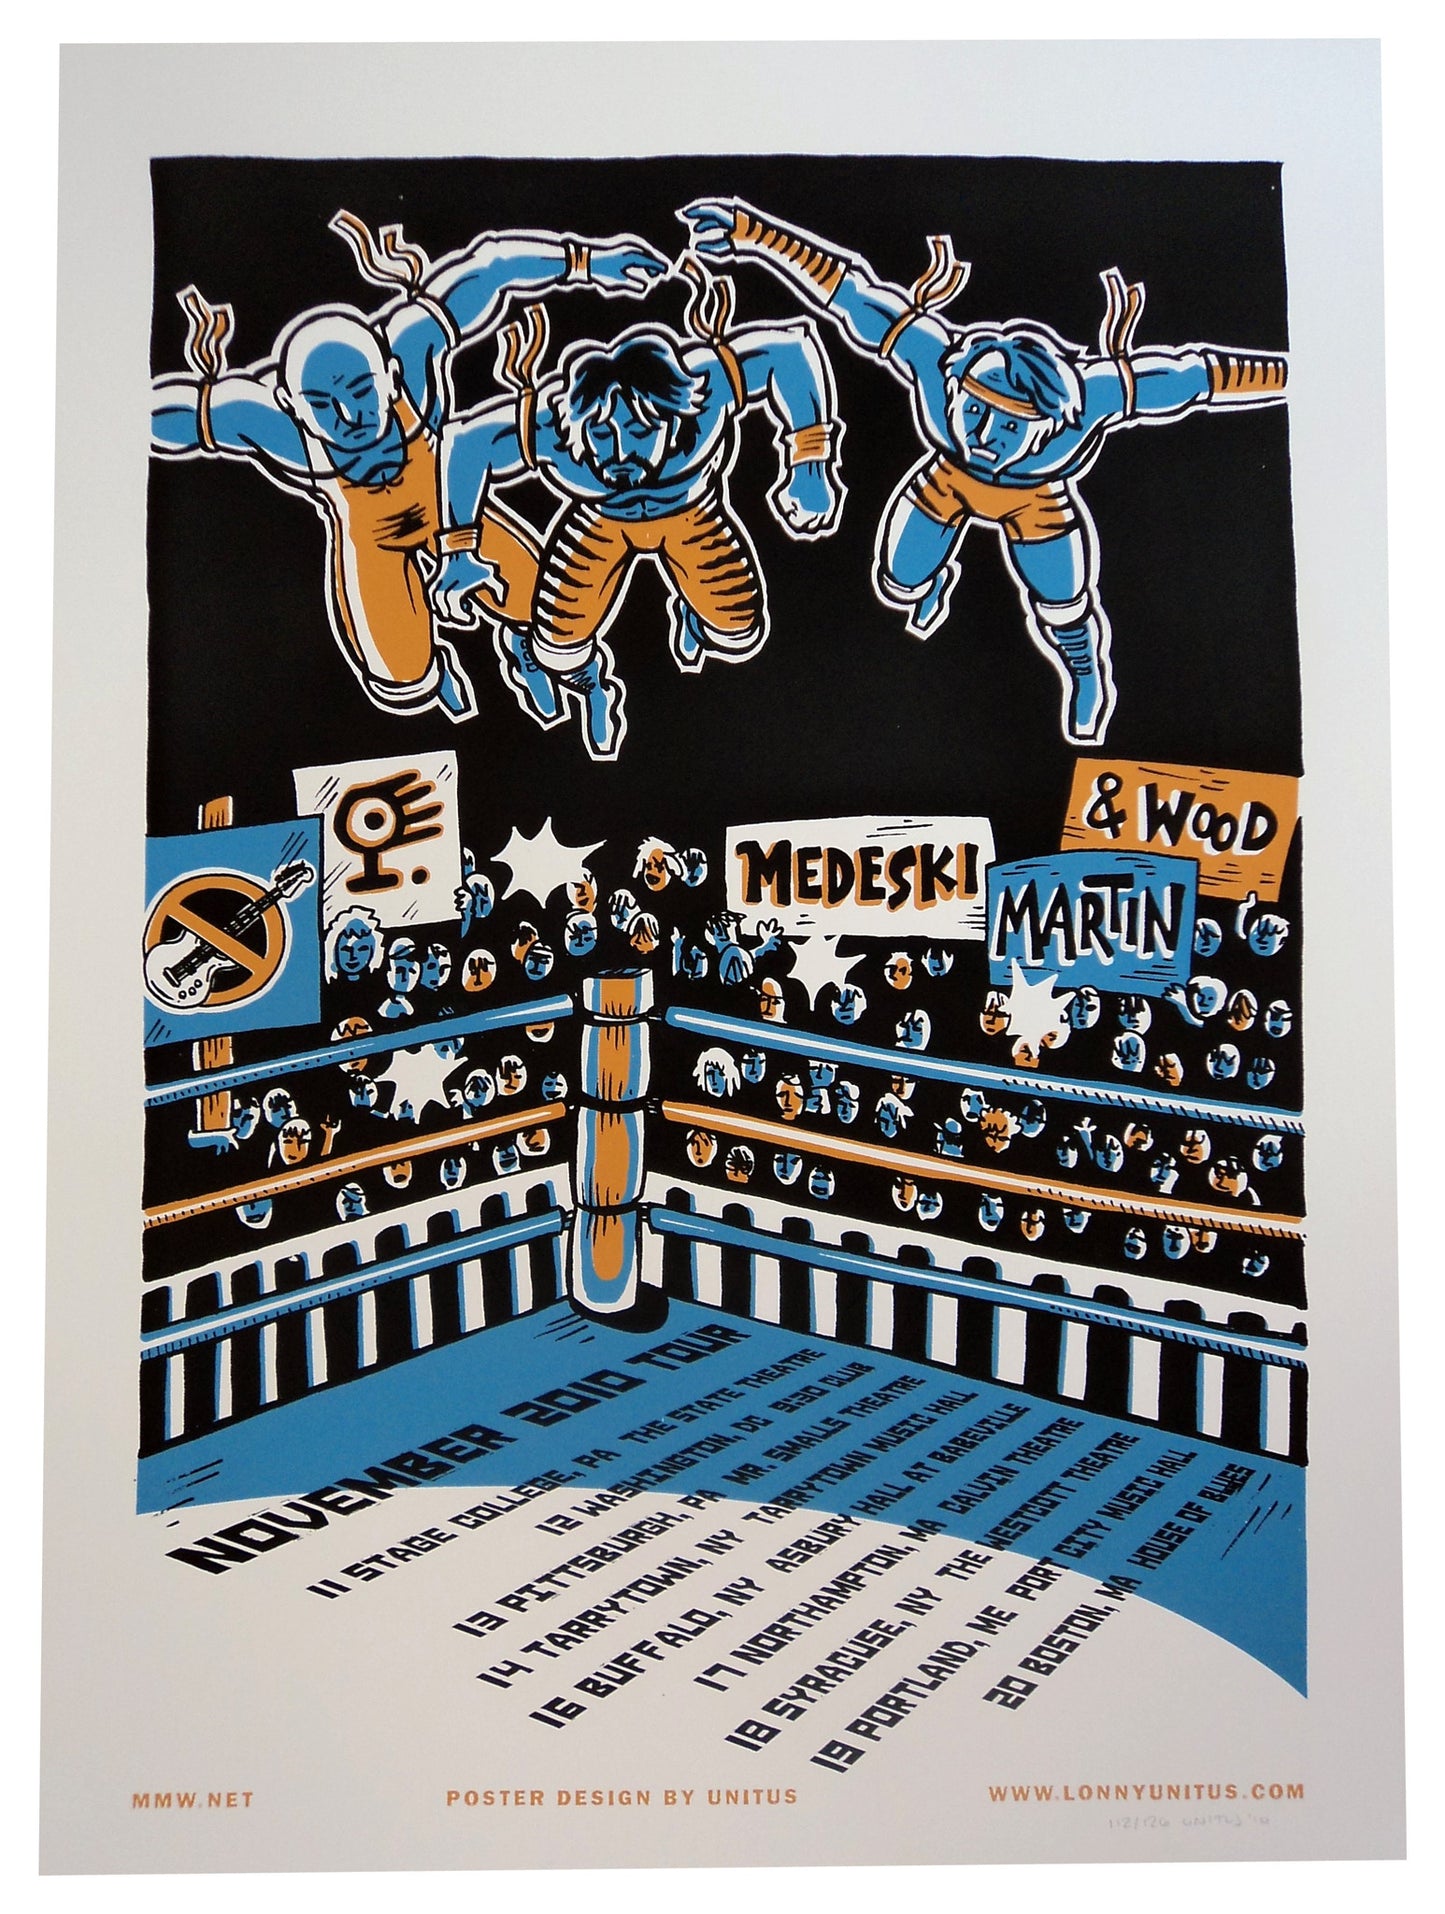 Lonny Unitus - 2010 - Medeski, Martin & Wood November Tour Concert Poster